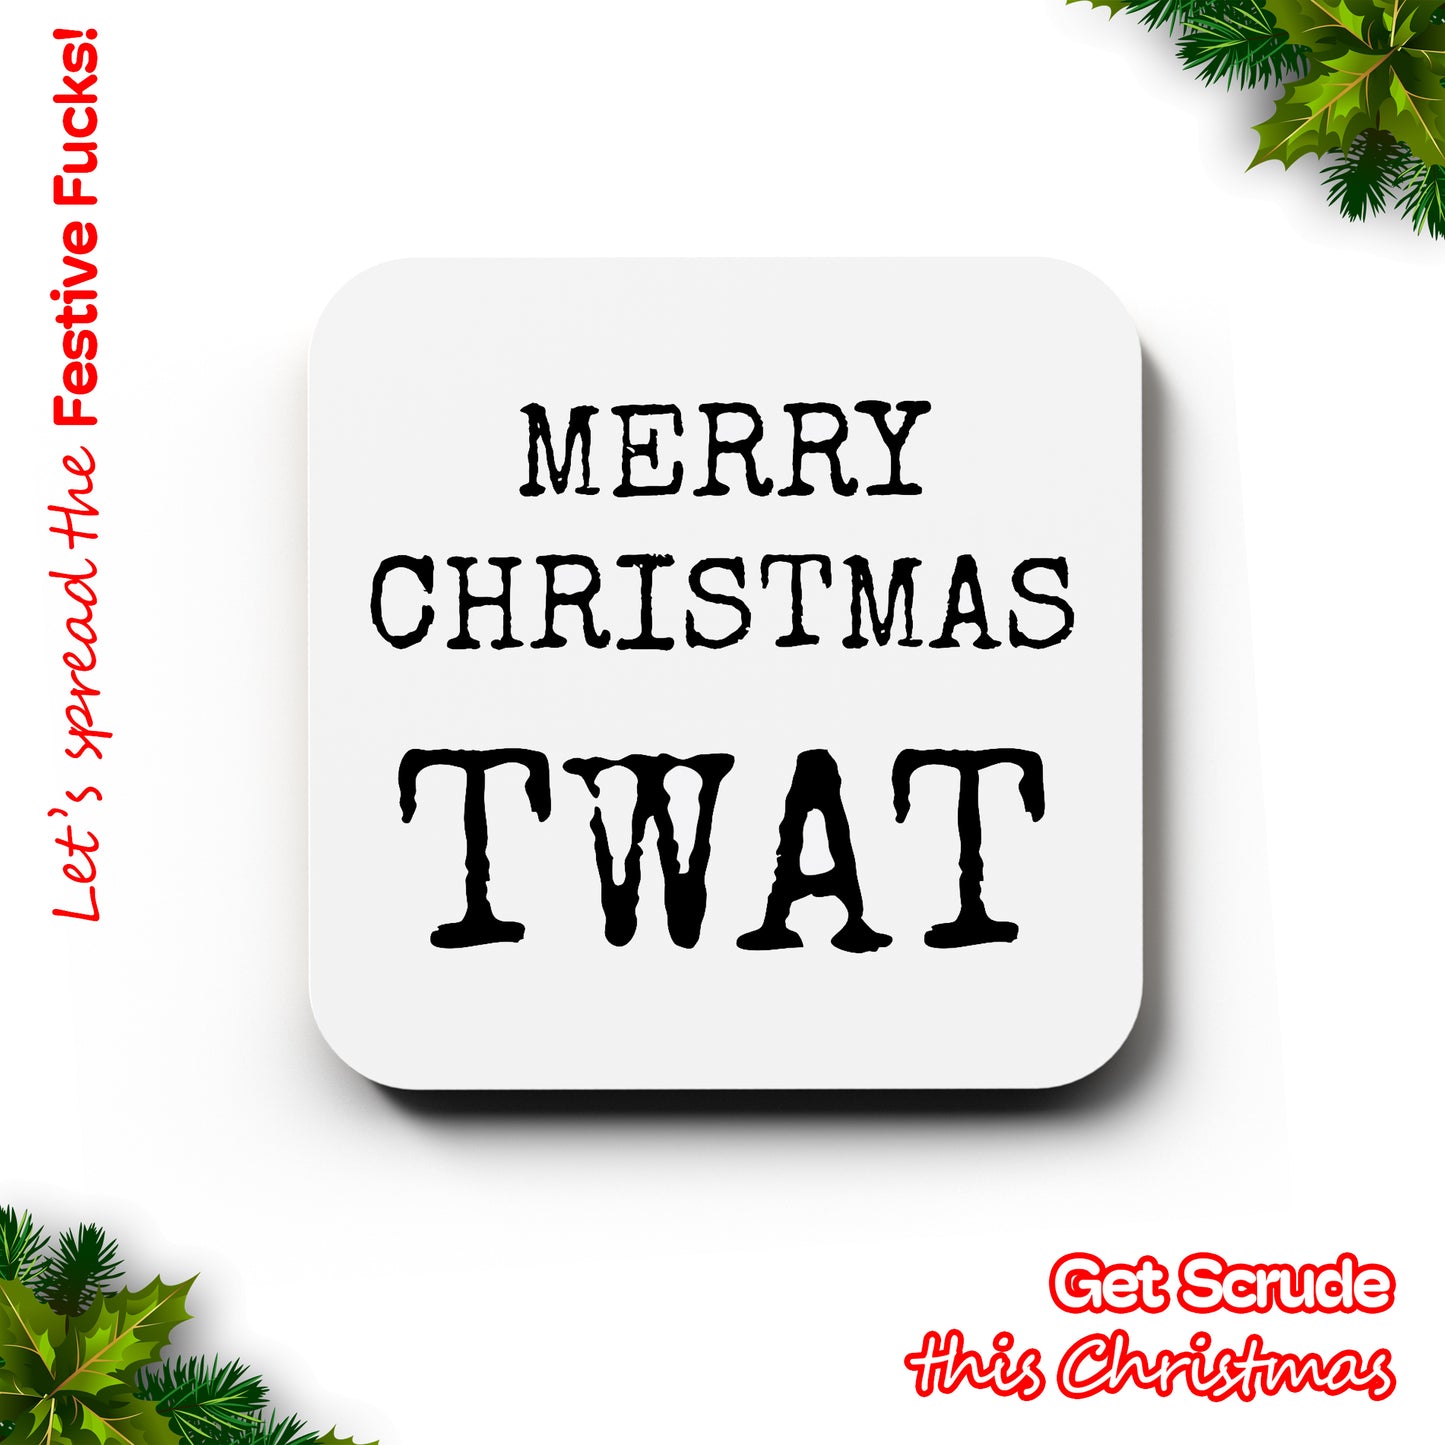 Merry Christmas Twat